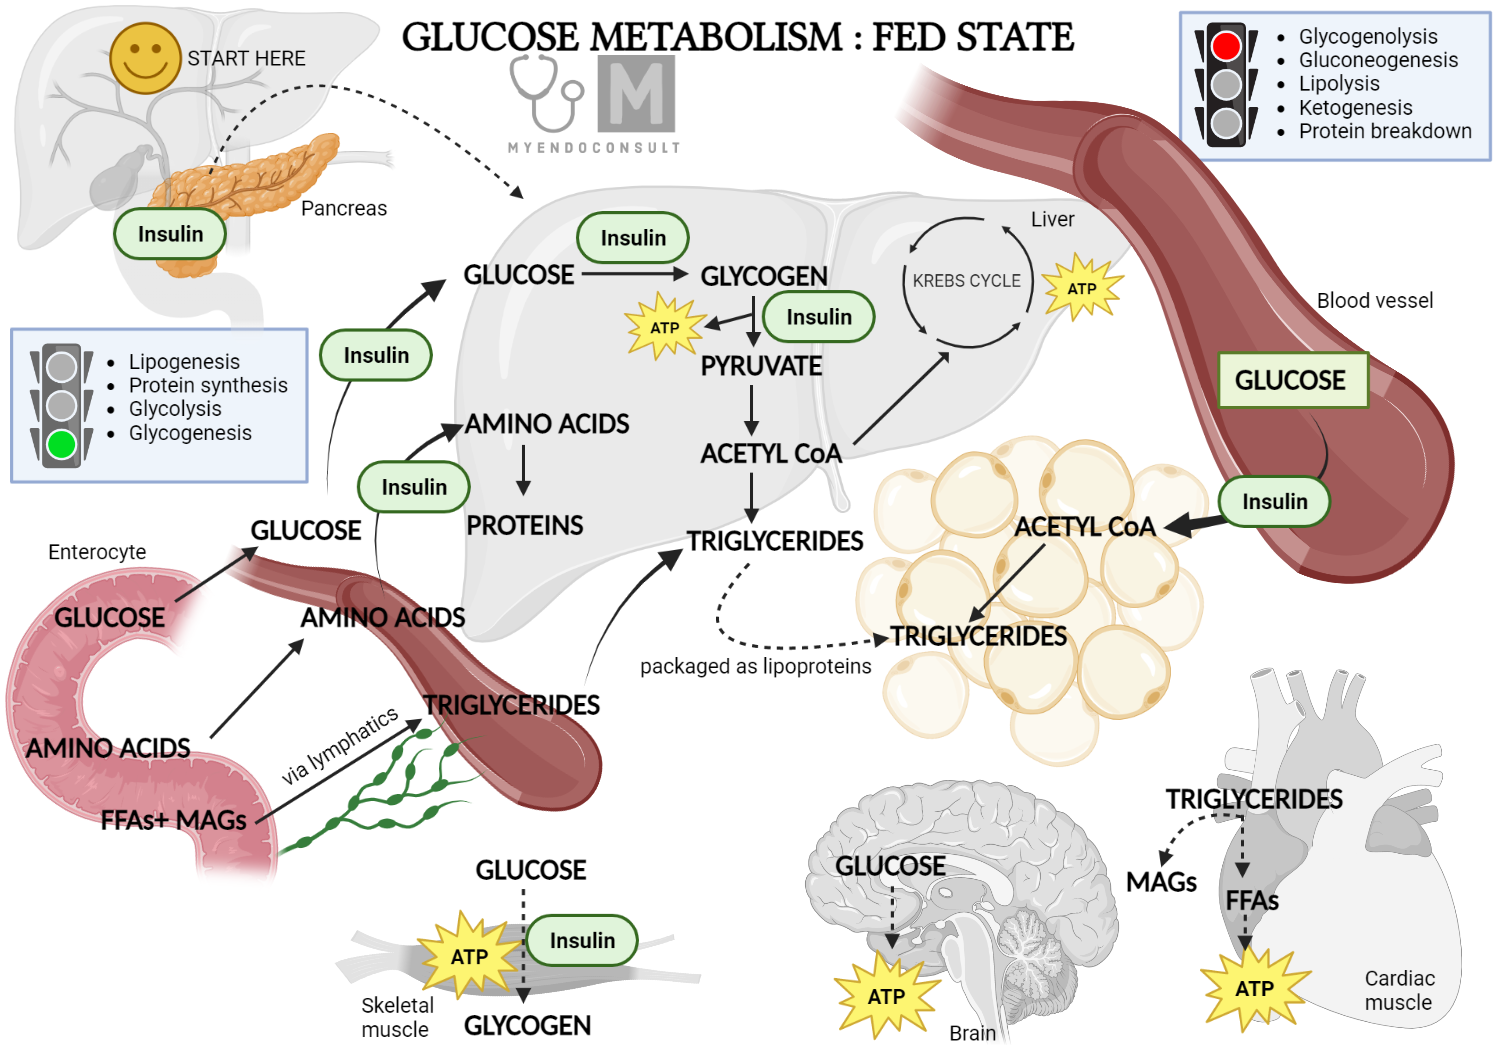 Glucose Metabolism Fed State